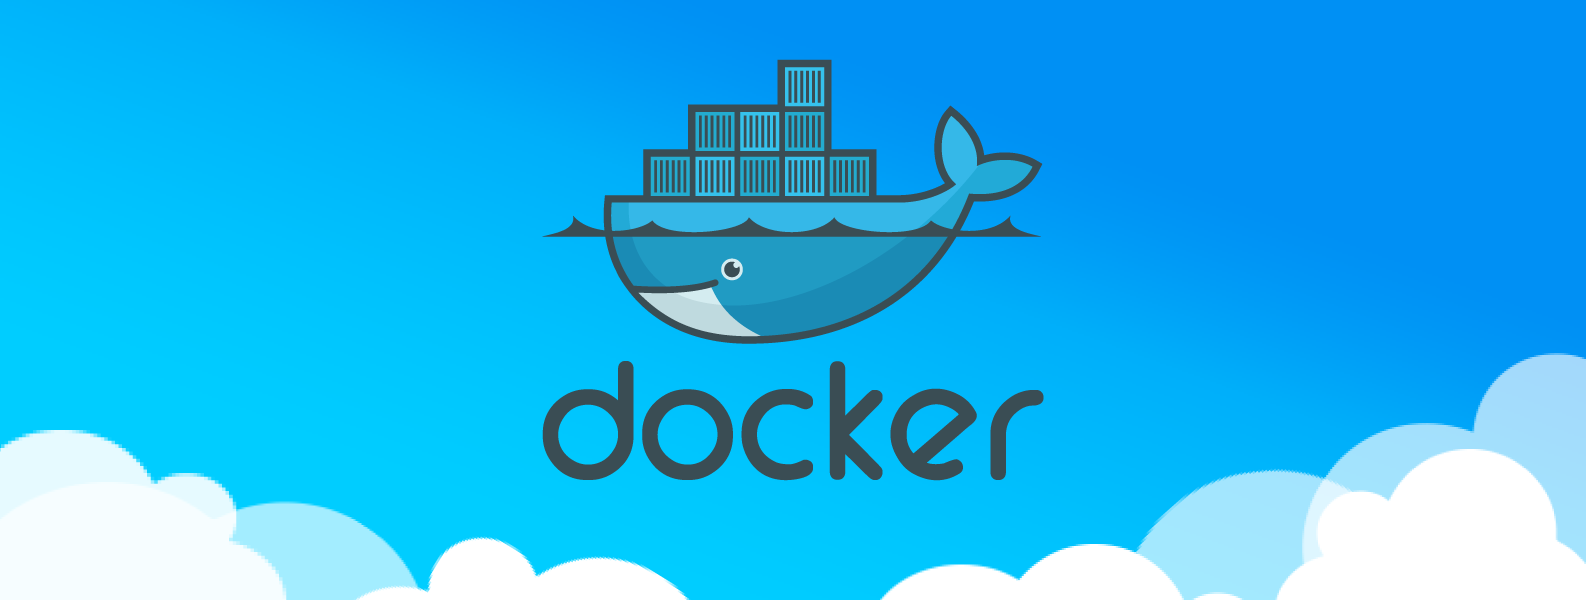 Docker-Image